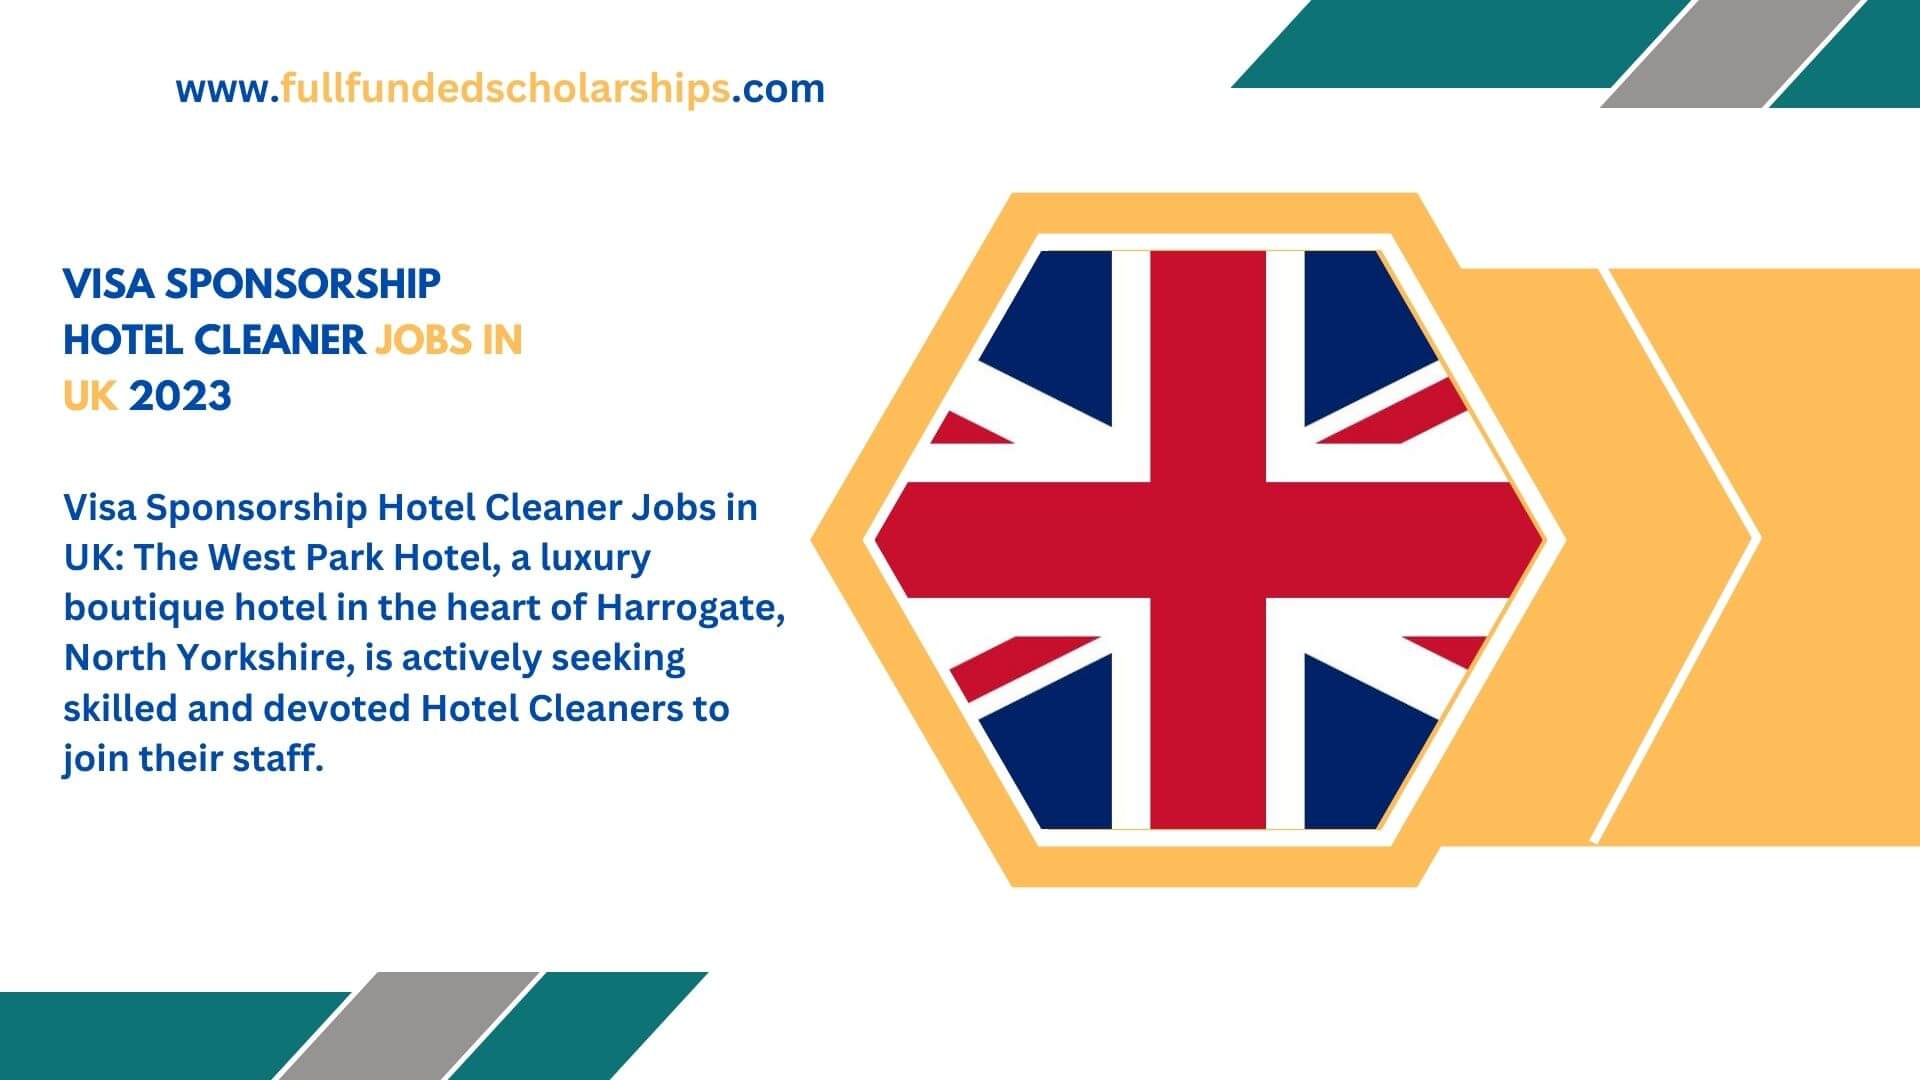 Visa Sponsorship Hotel Cleaner Jobs in UK 2023